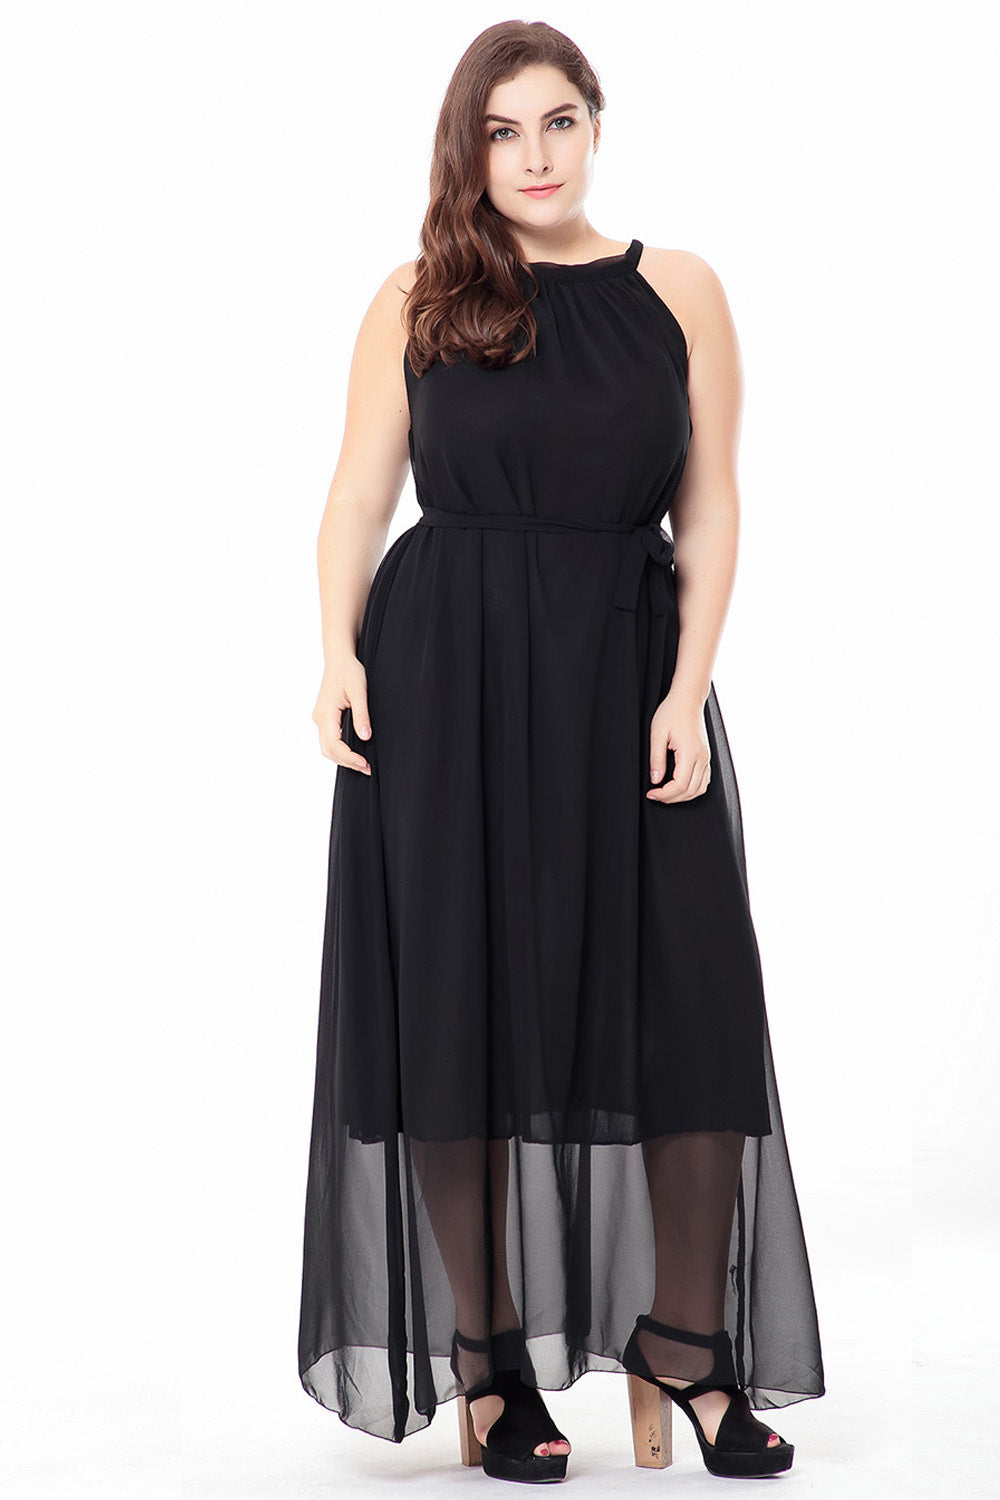 Summer Boho Plus Sizes Chiffon Dresses-Maxi Dresses-Black-L-US 12-Free Shipping at meselling99